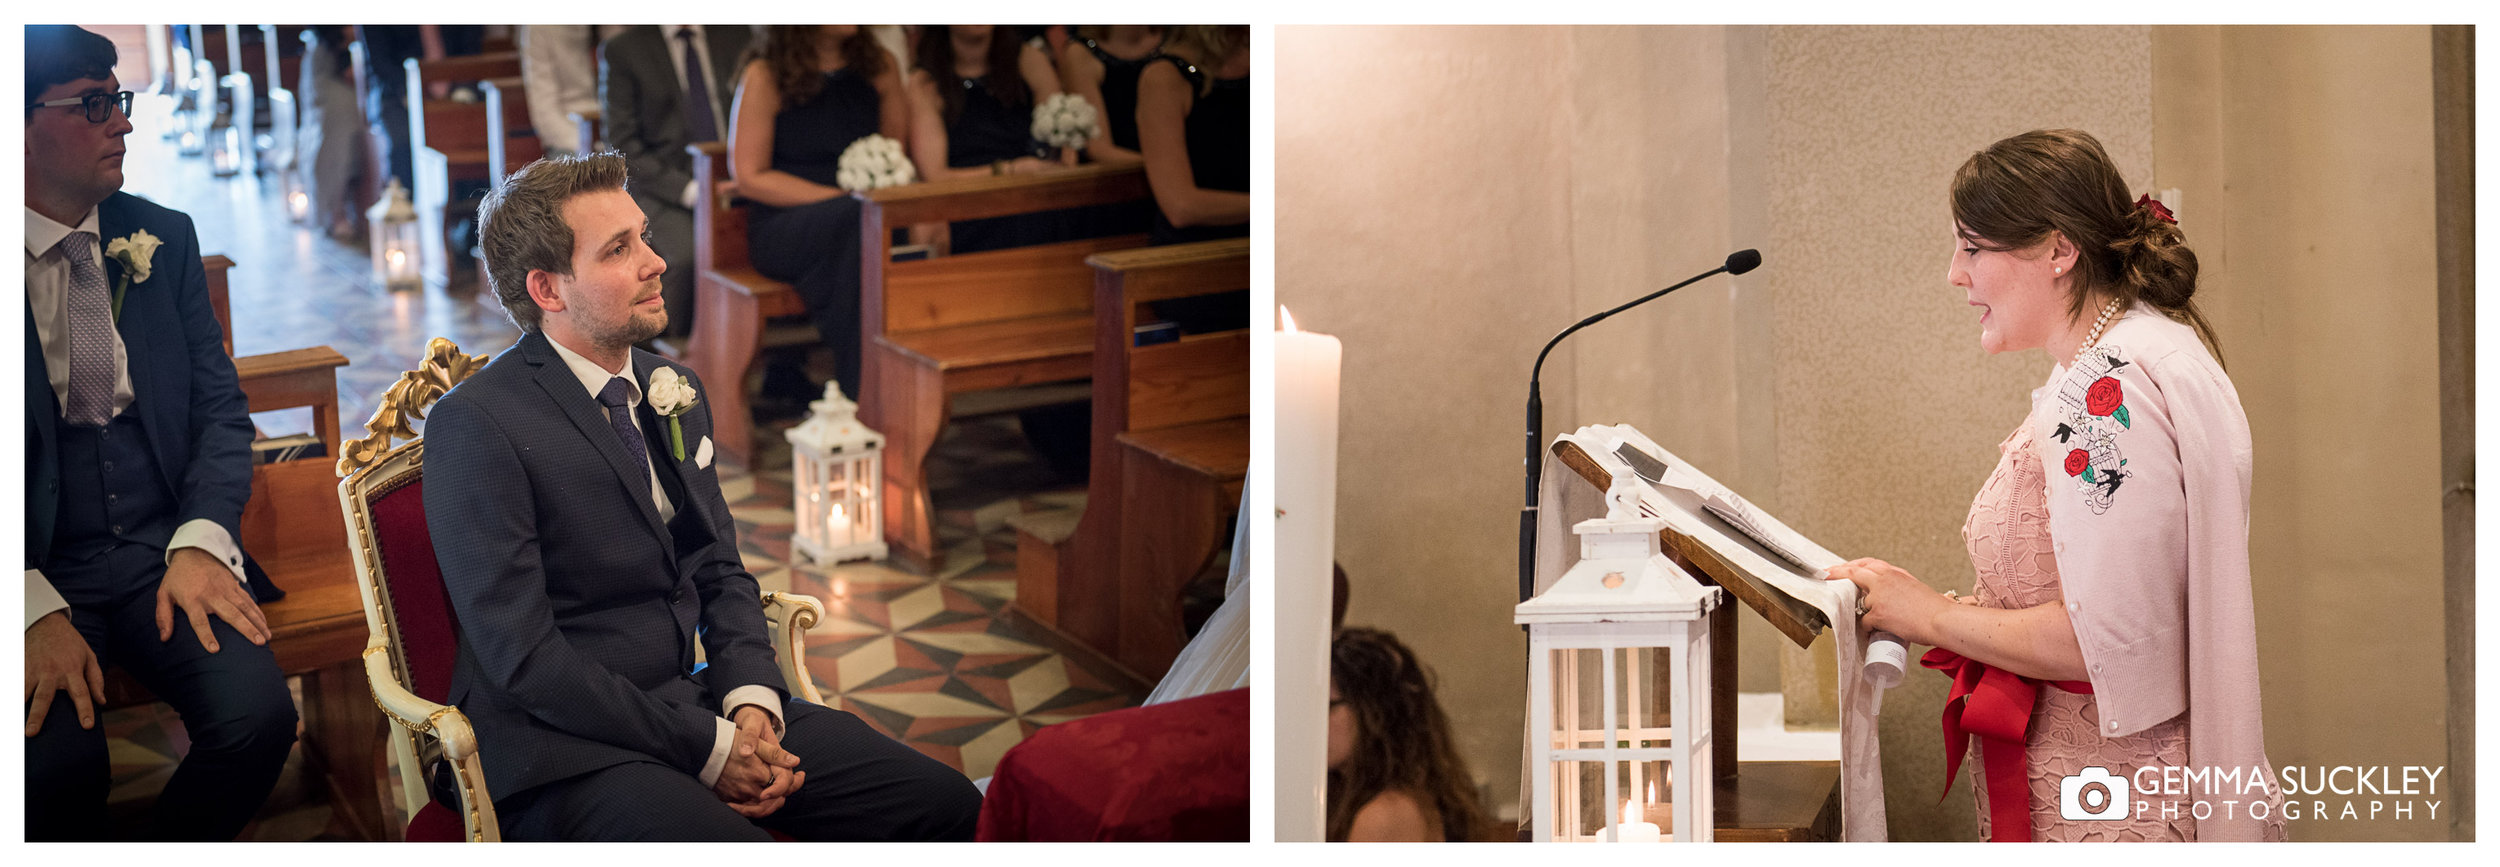 wedding reading in Lake Garda Church 